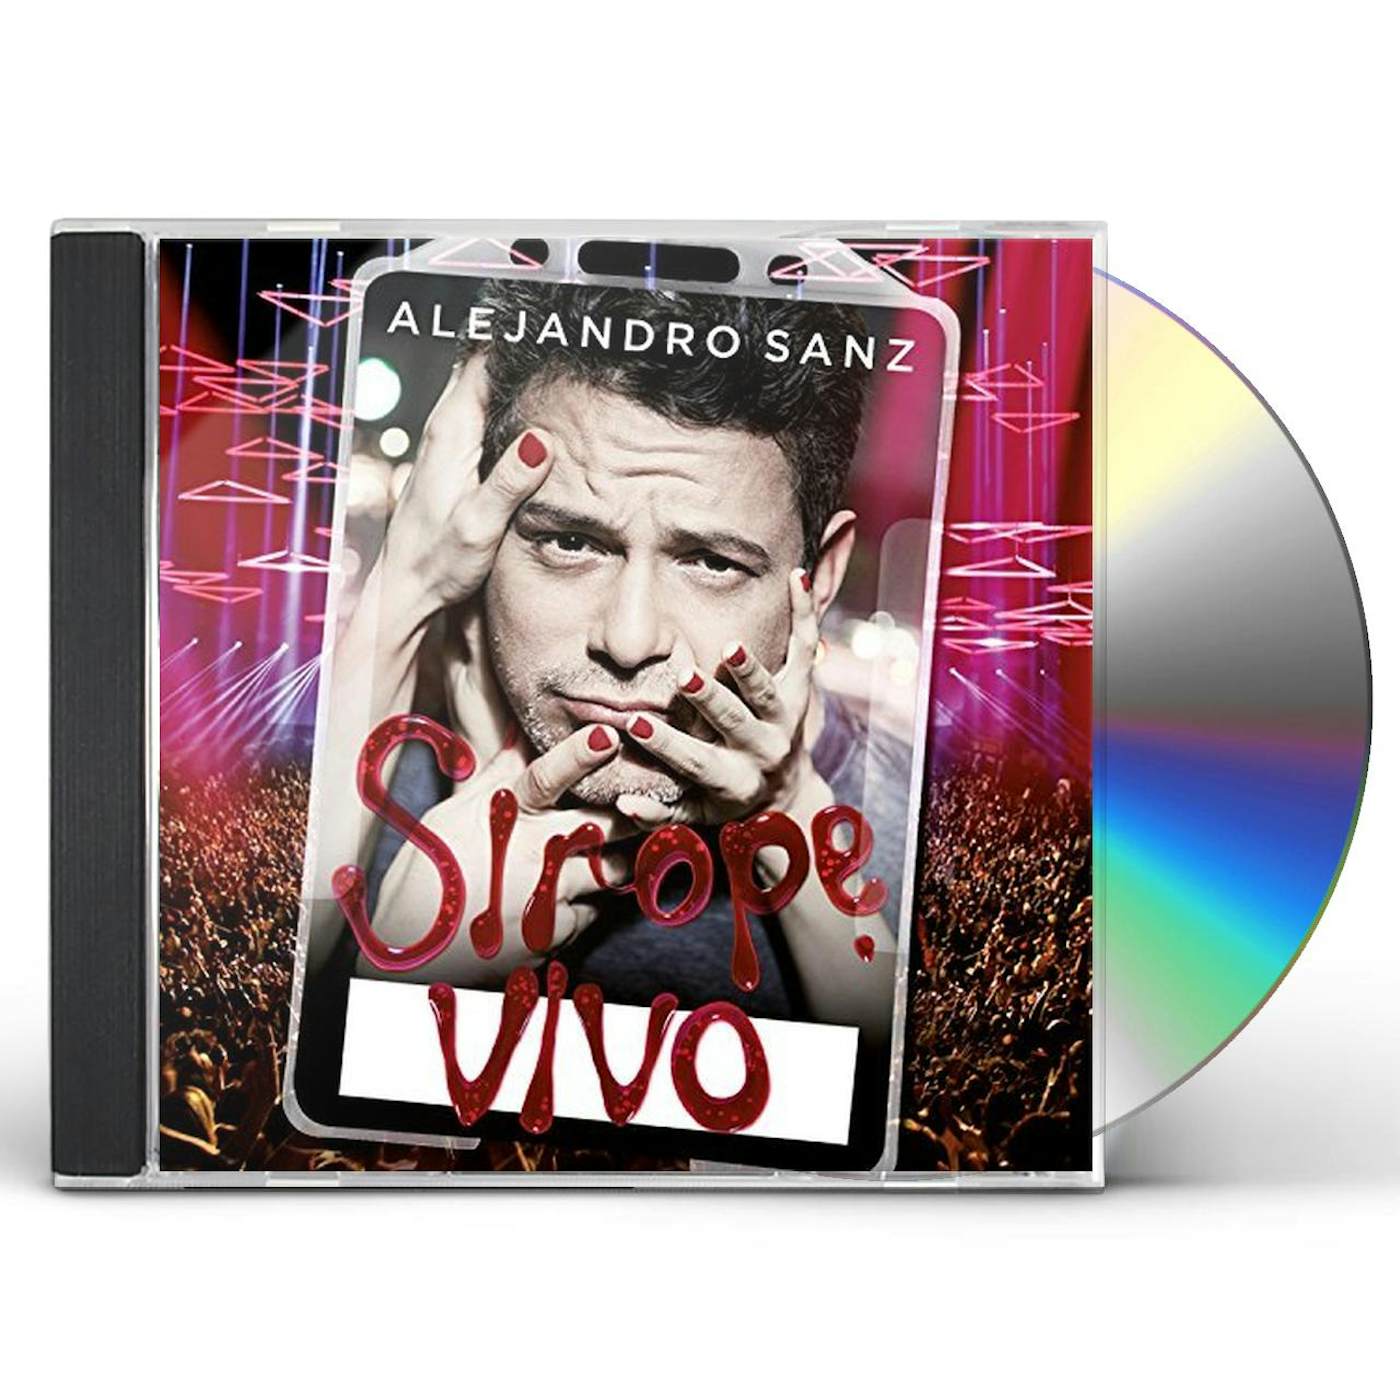 Alejandro Sanz SIROPE VIVO CD